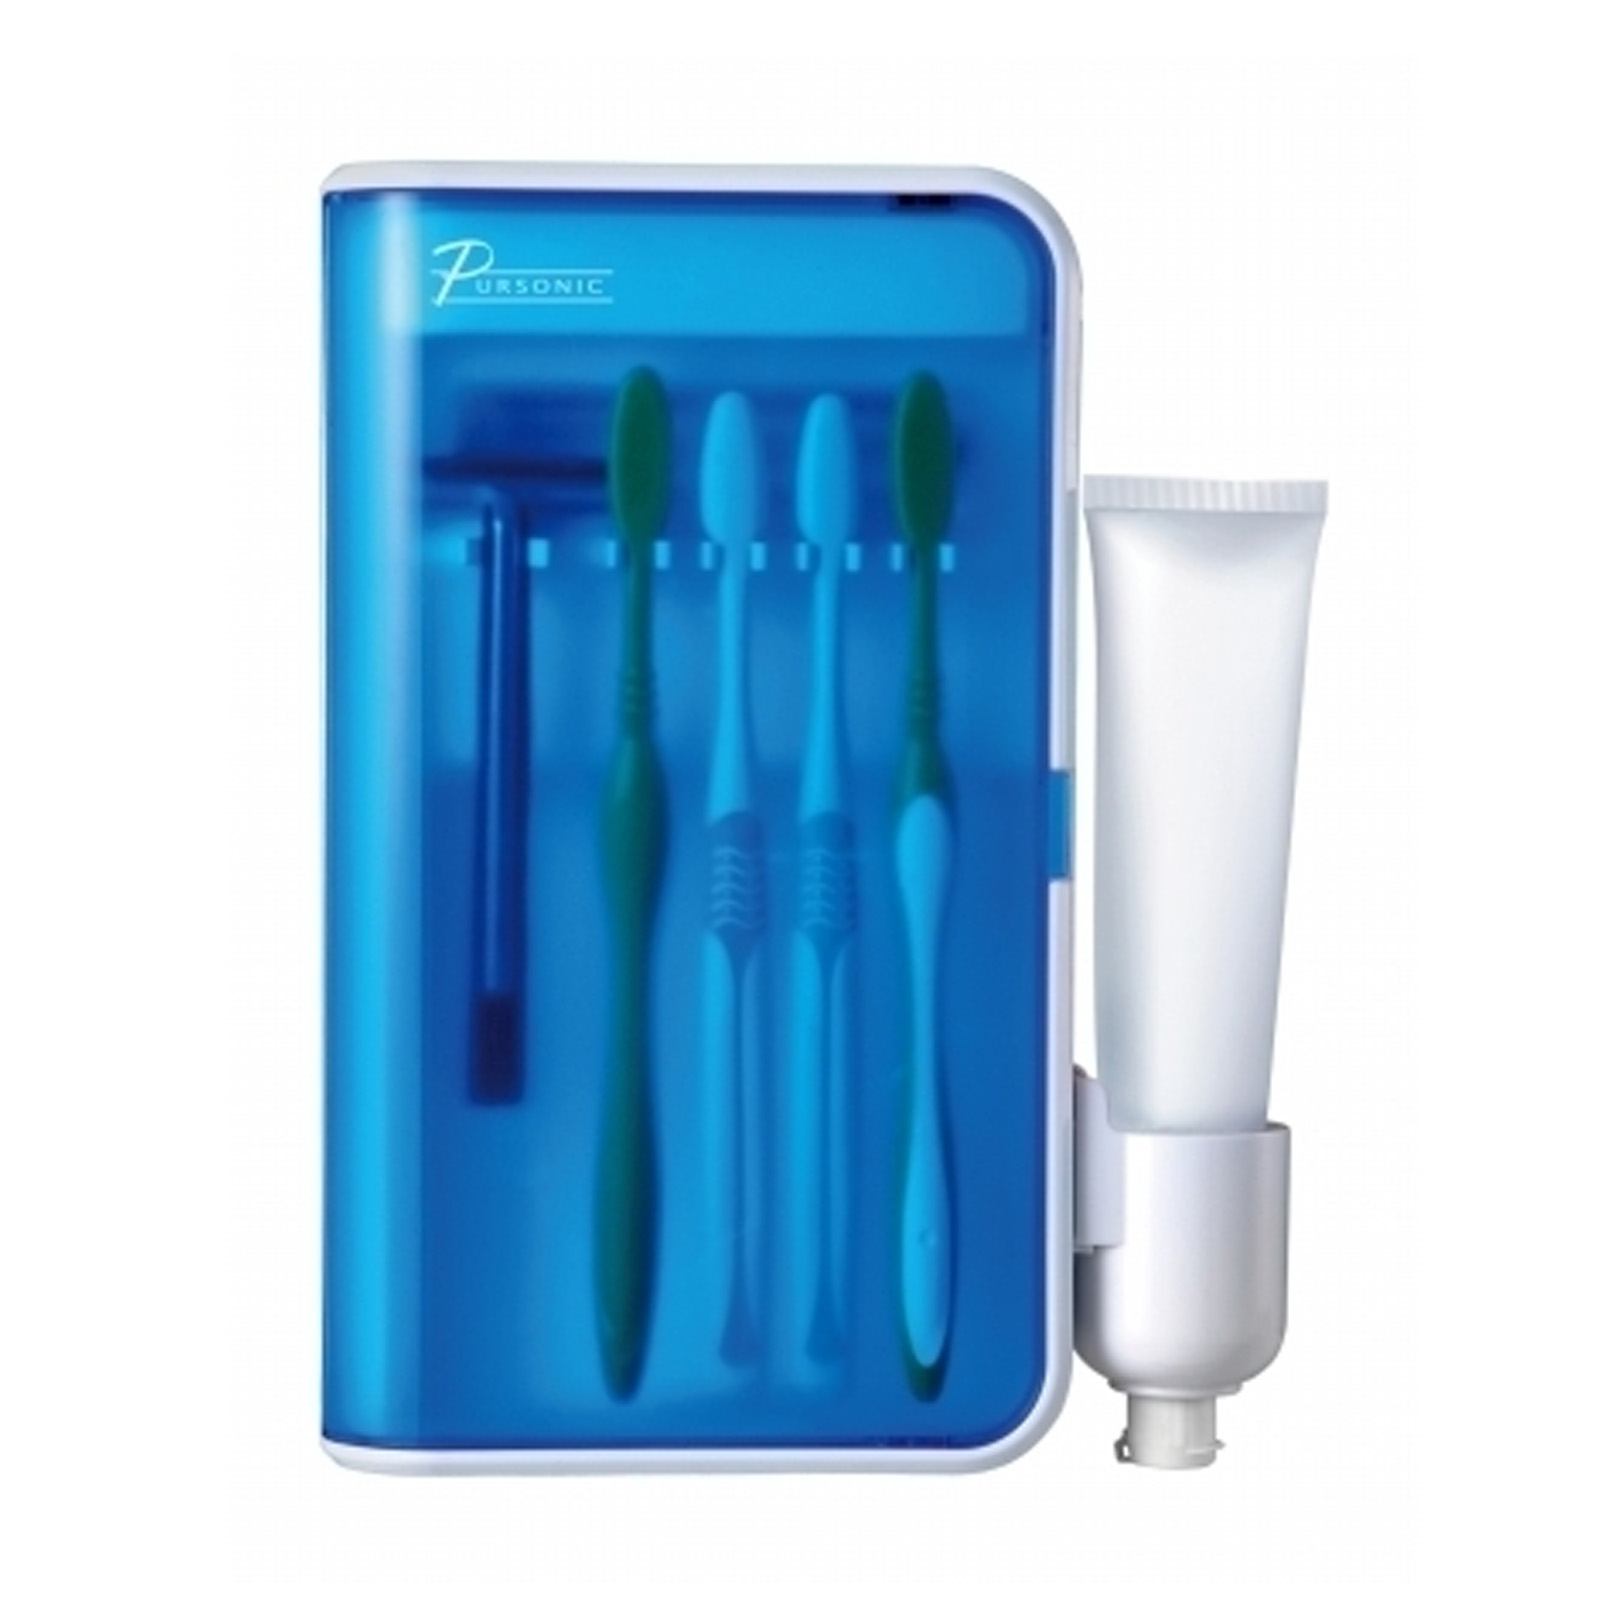 Pursonic Multiple Toothbrush Sanitizer